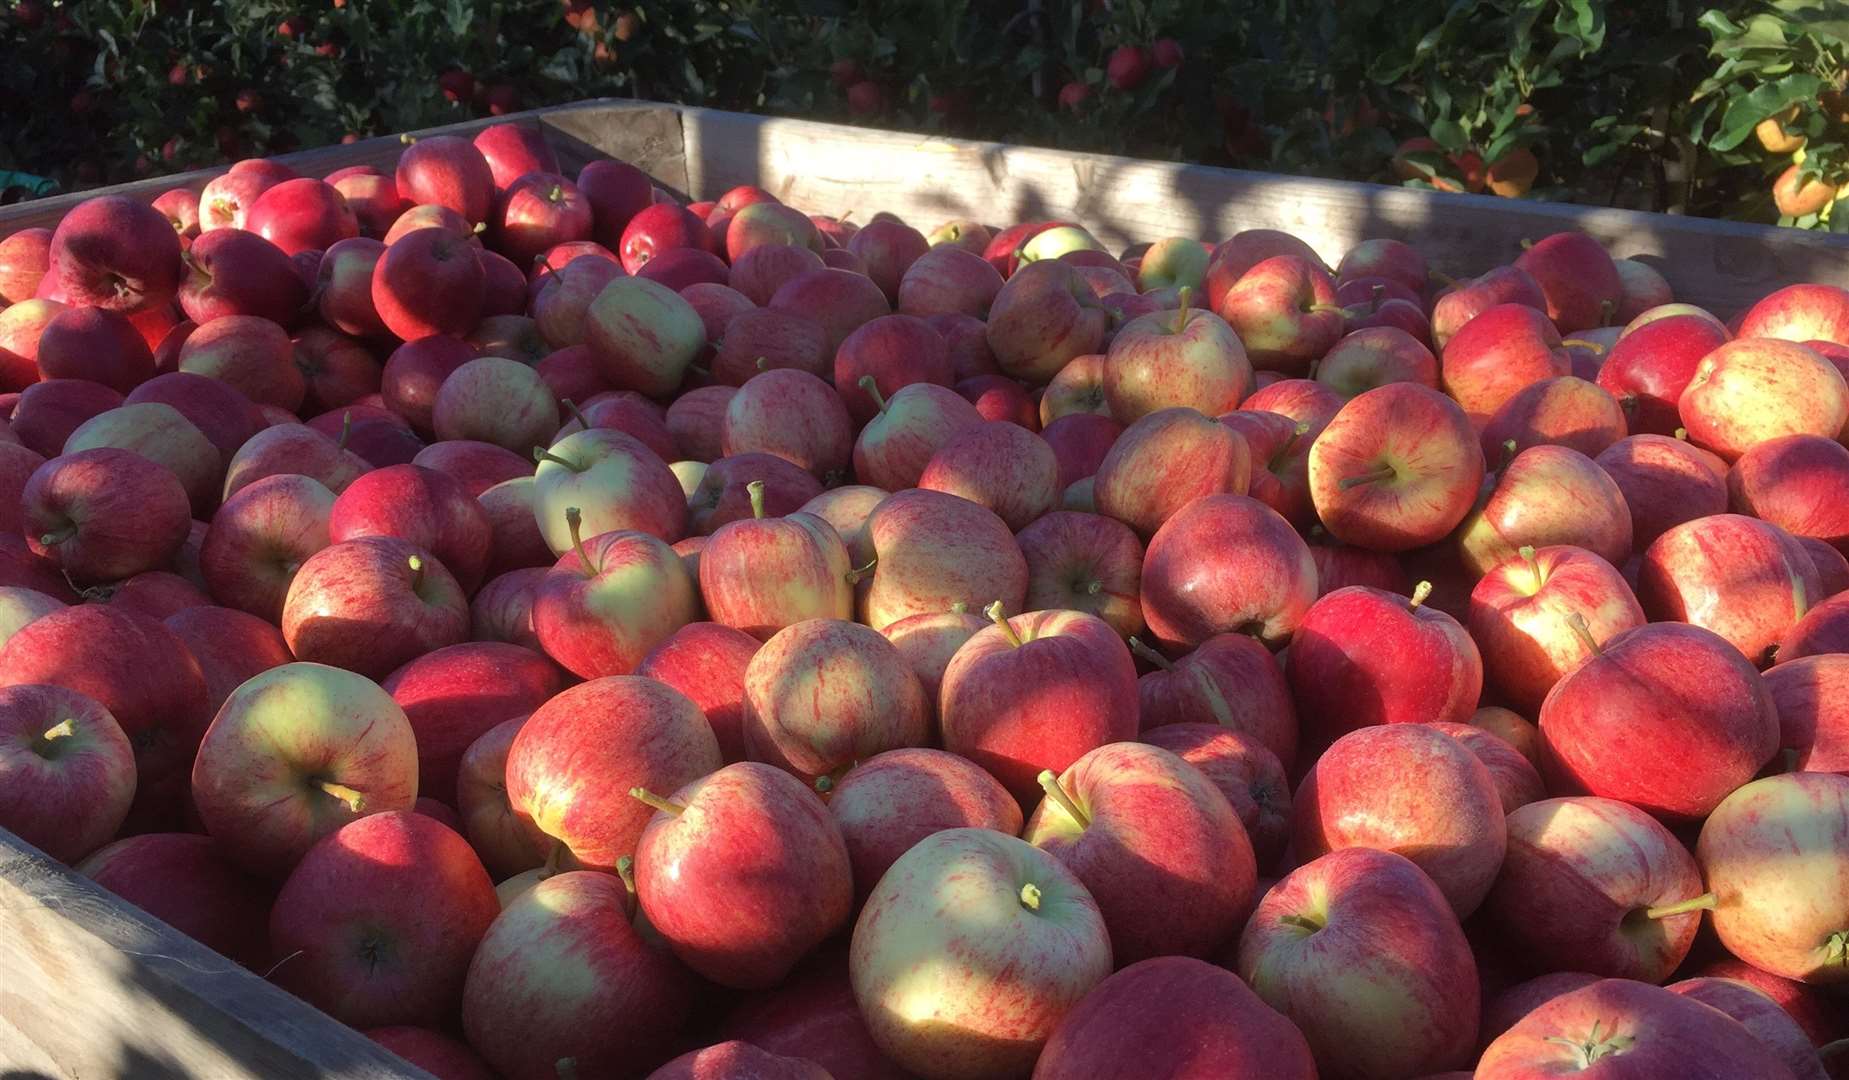 British Royal Gala apples harvested in Kent.